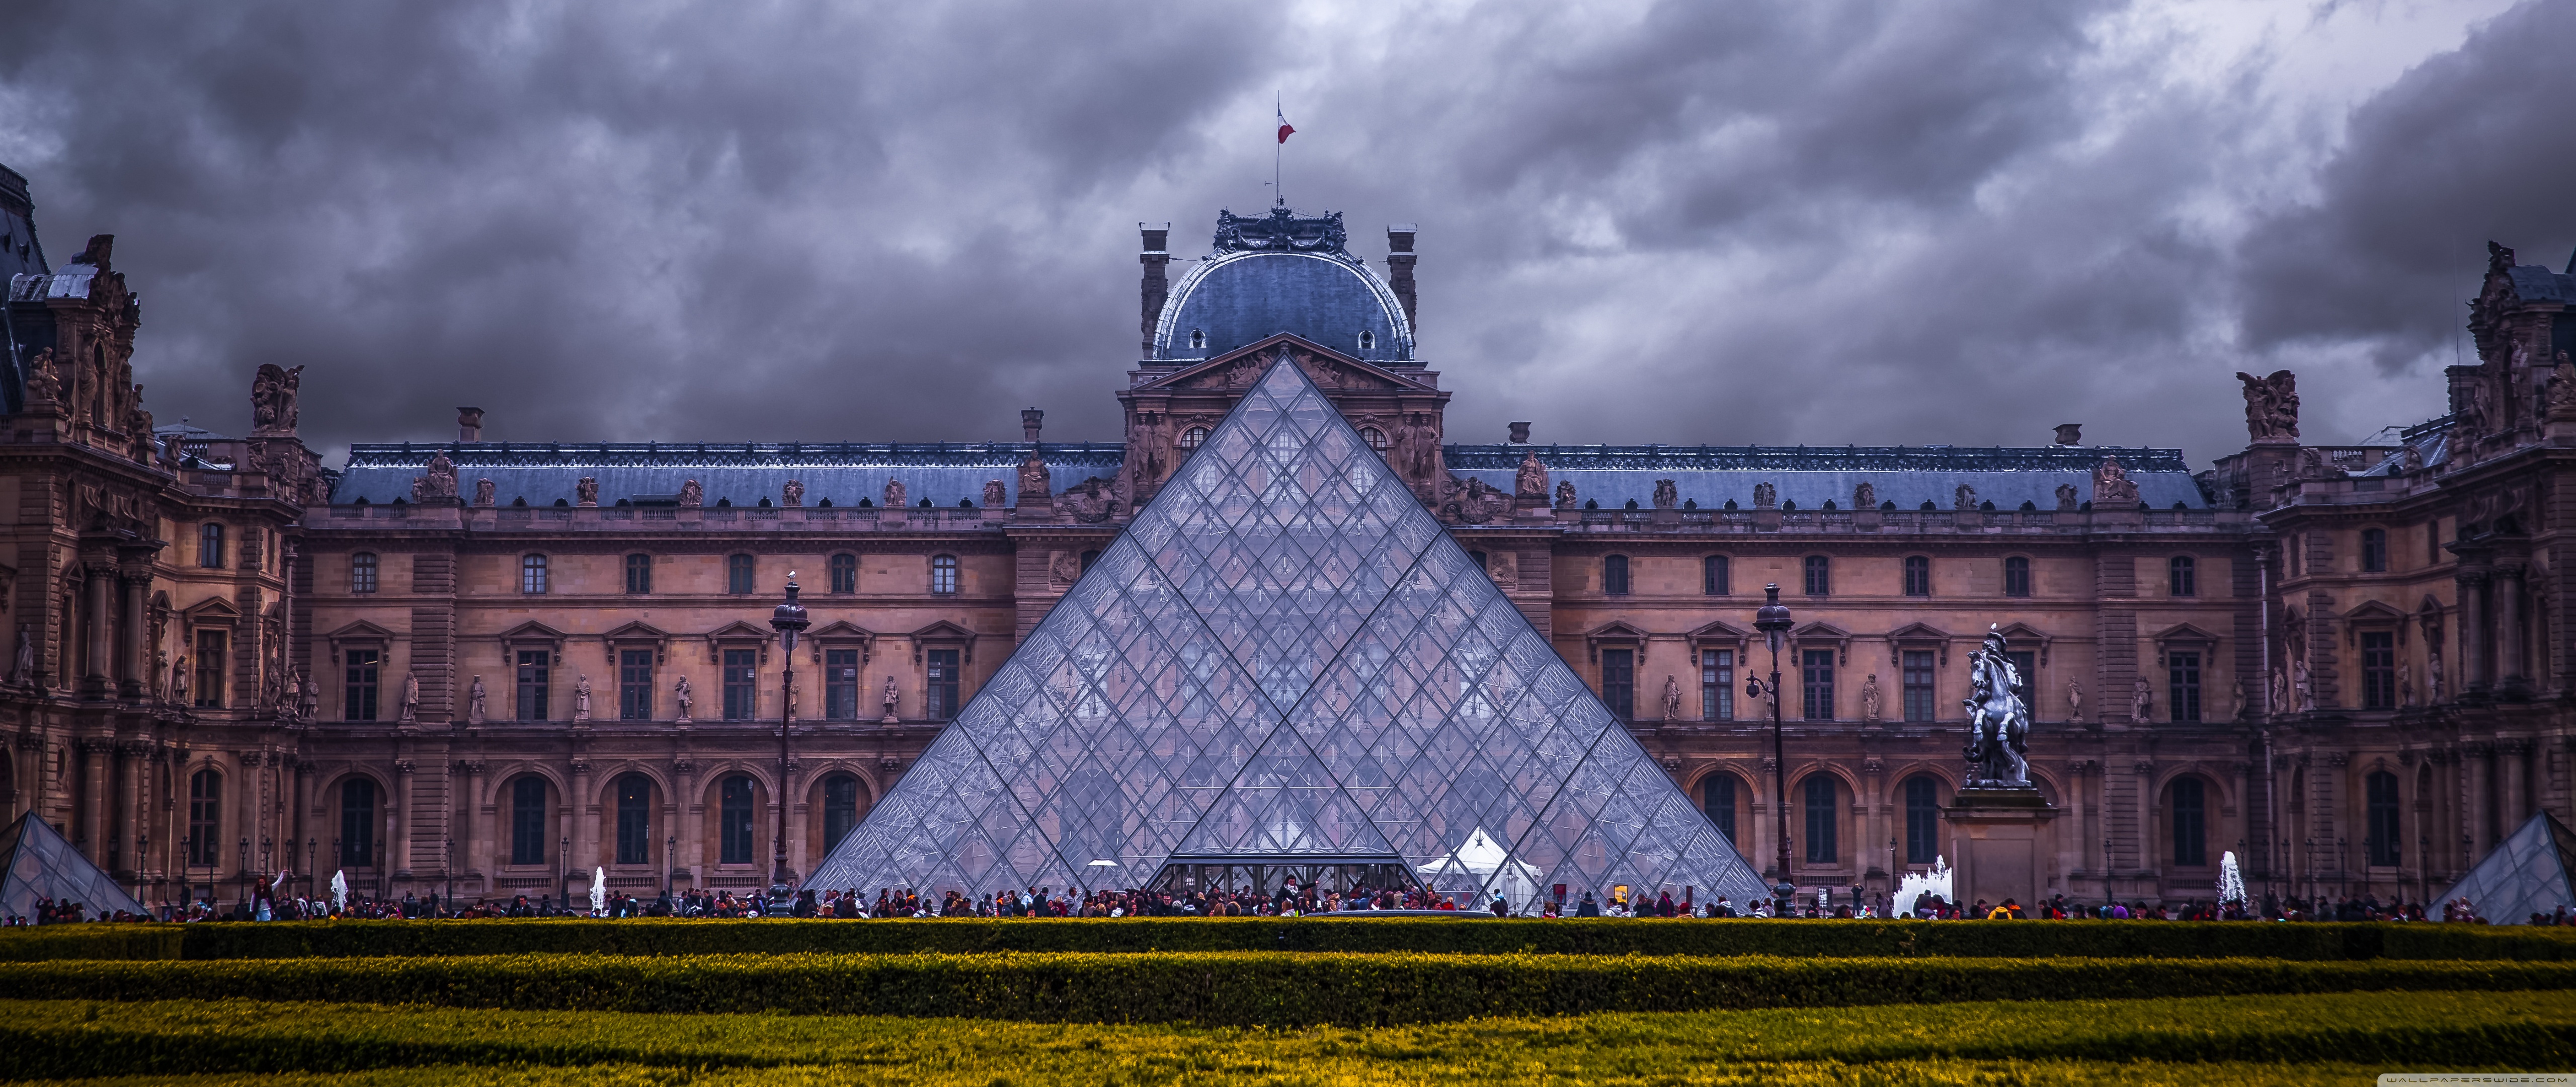 Best Louvre Palace In Paris Wallpaper Image